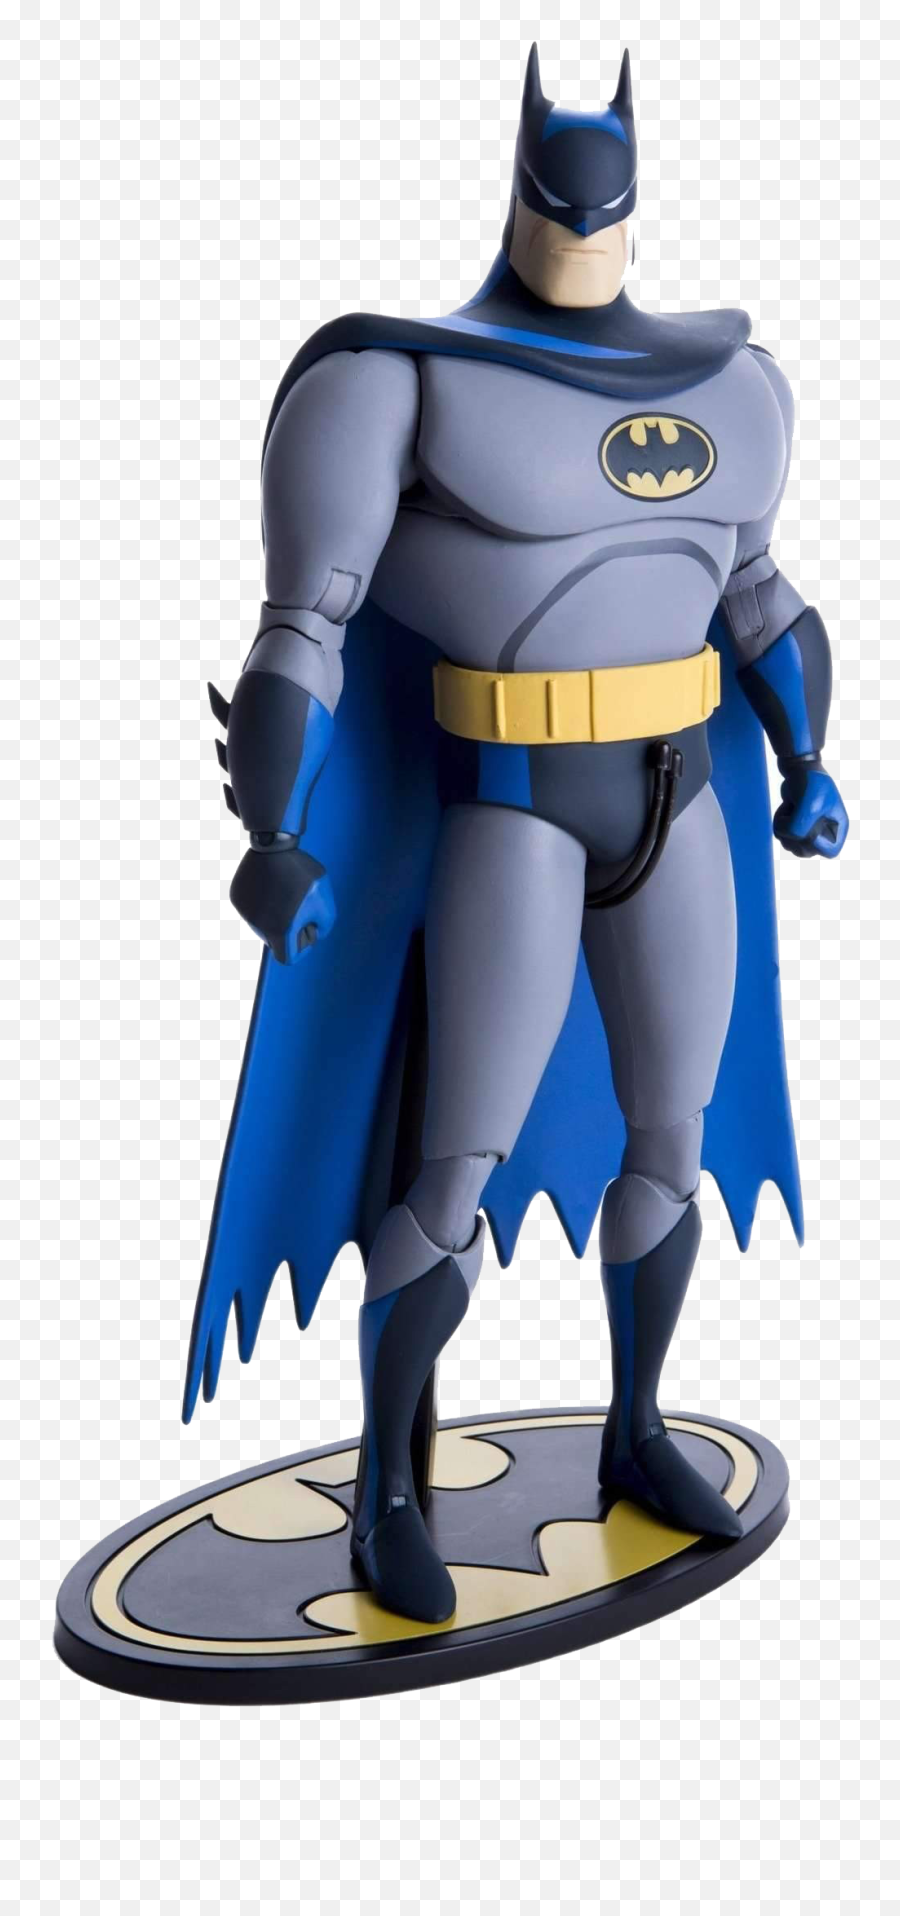 Batman Png Free Images